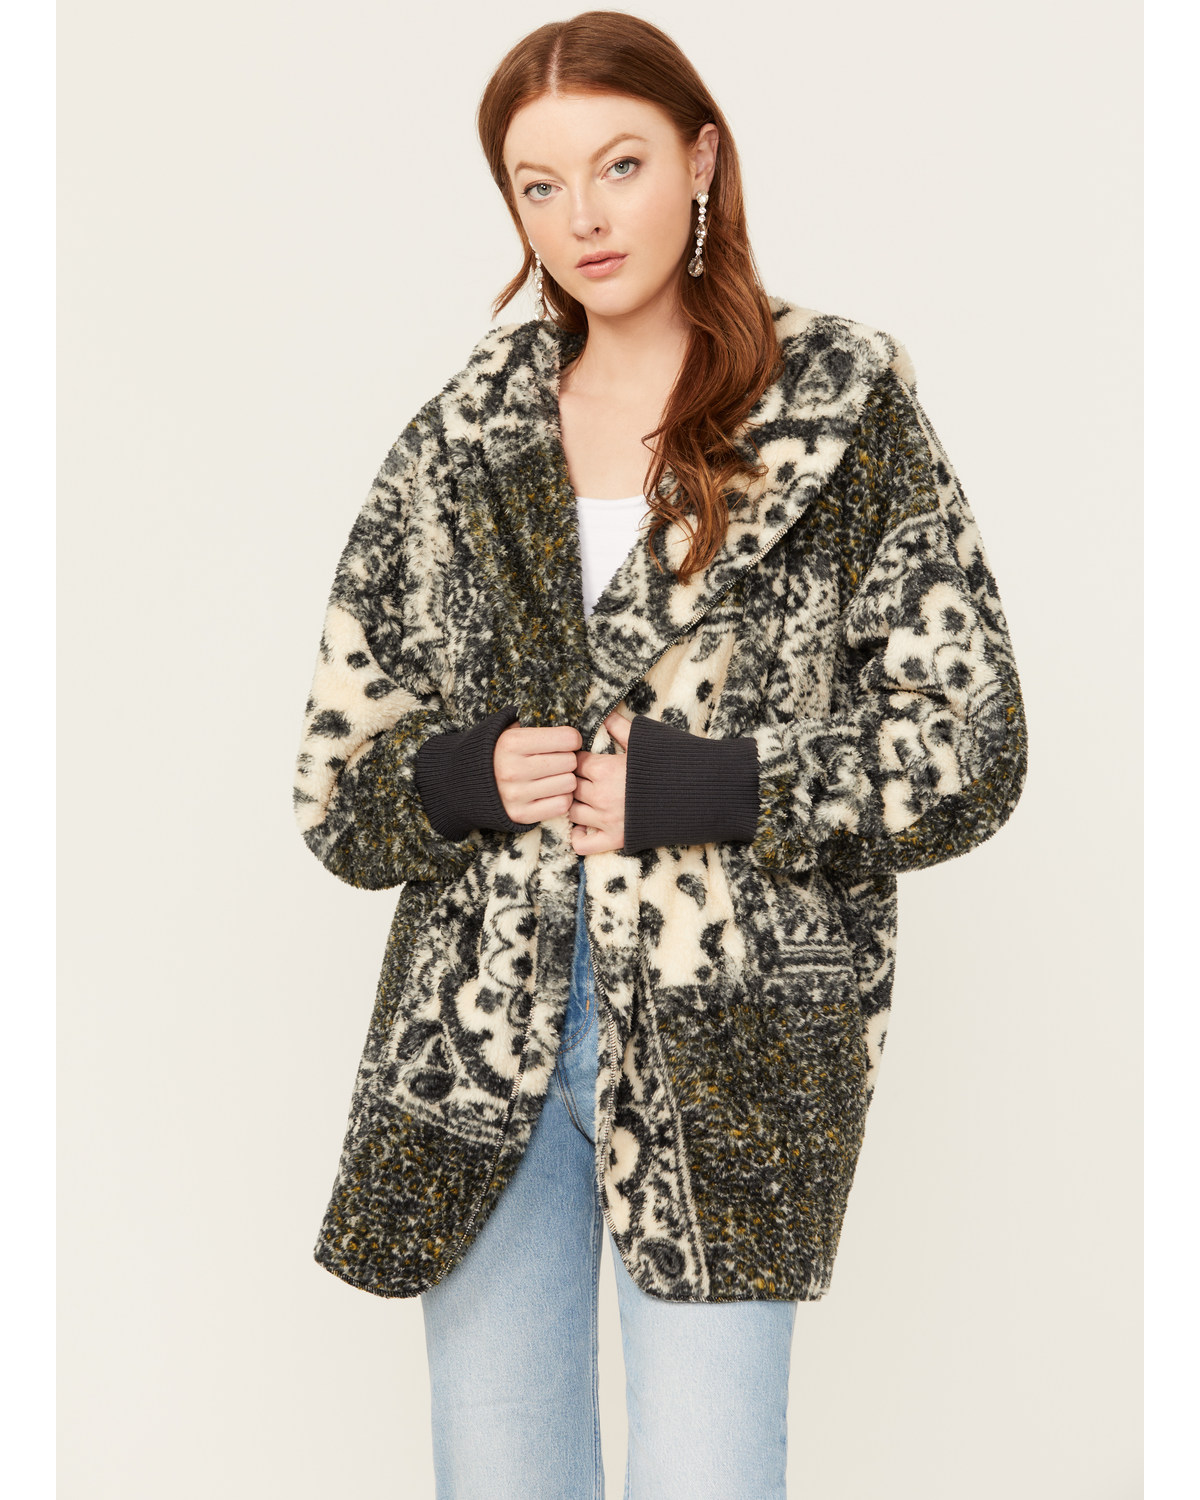 Mystree Women's Paisley Print Fur Hooded Jacket